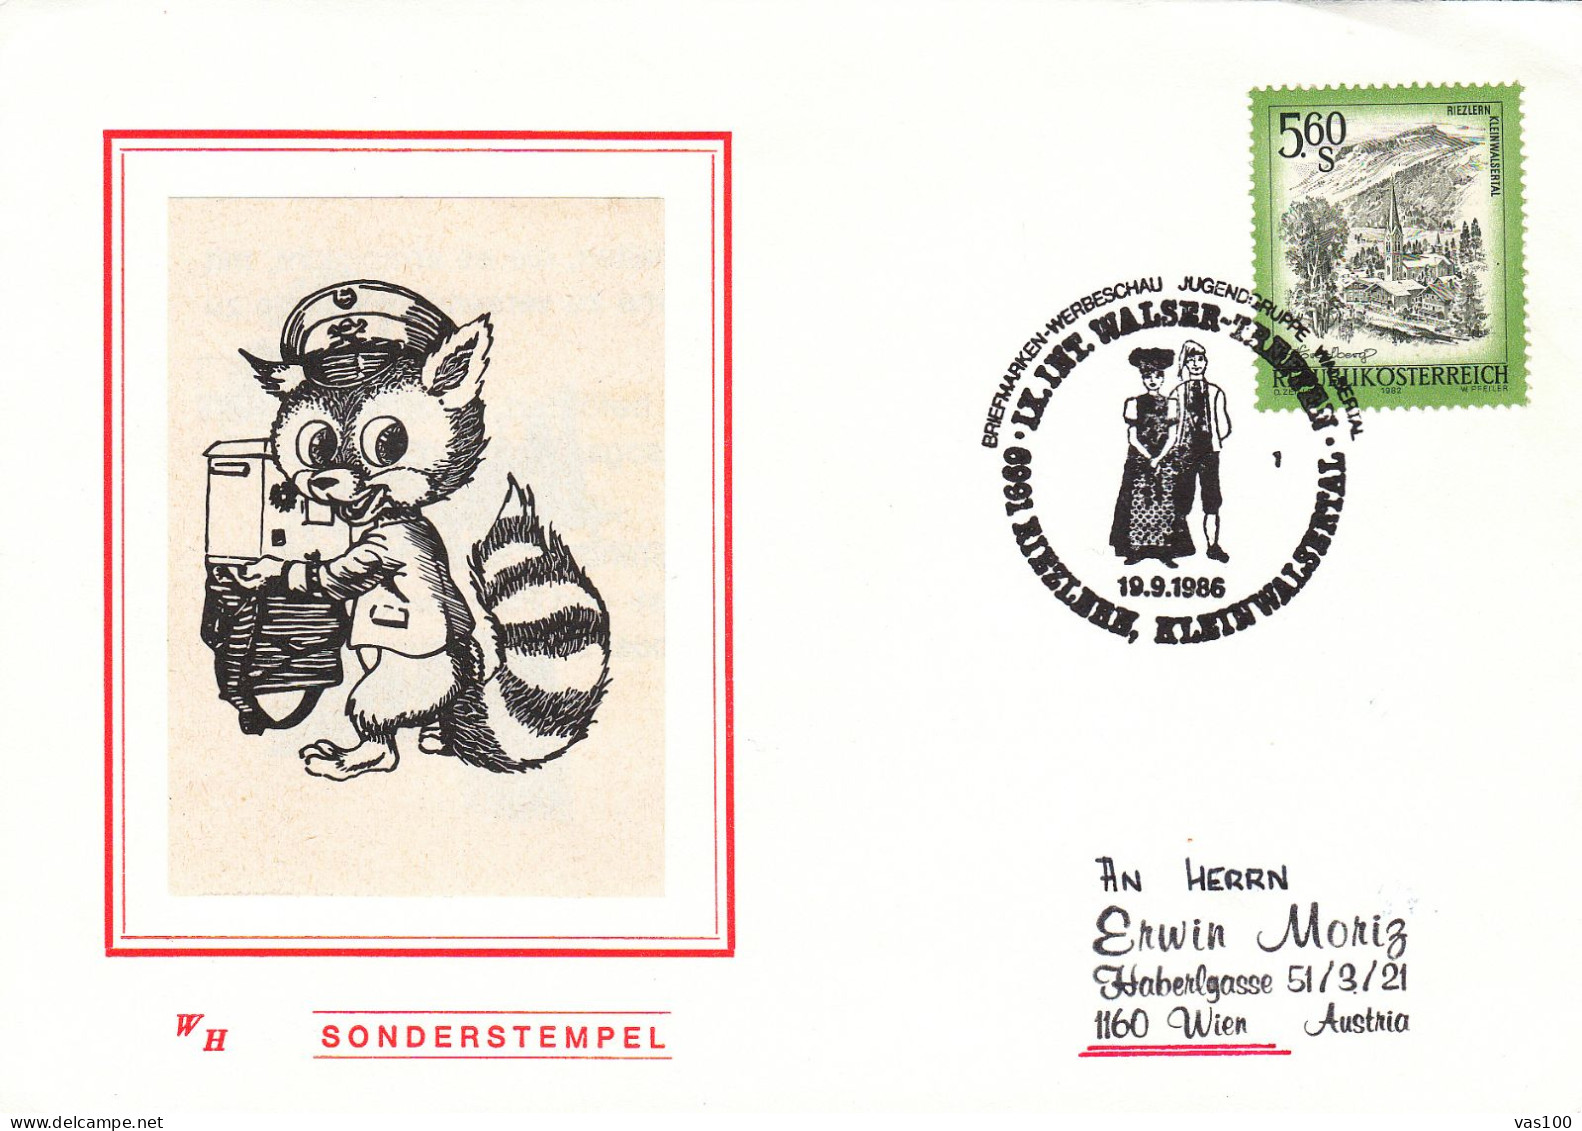 AUSTRIA POSTAL HISTORY / KLEINWALSERTAL, HABERLGASSE, 19.09.1986 - Covers & Documents